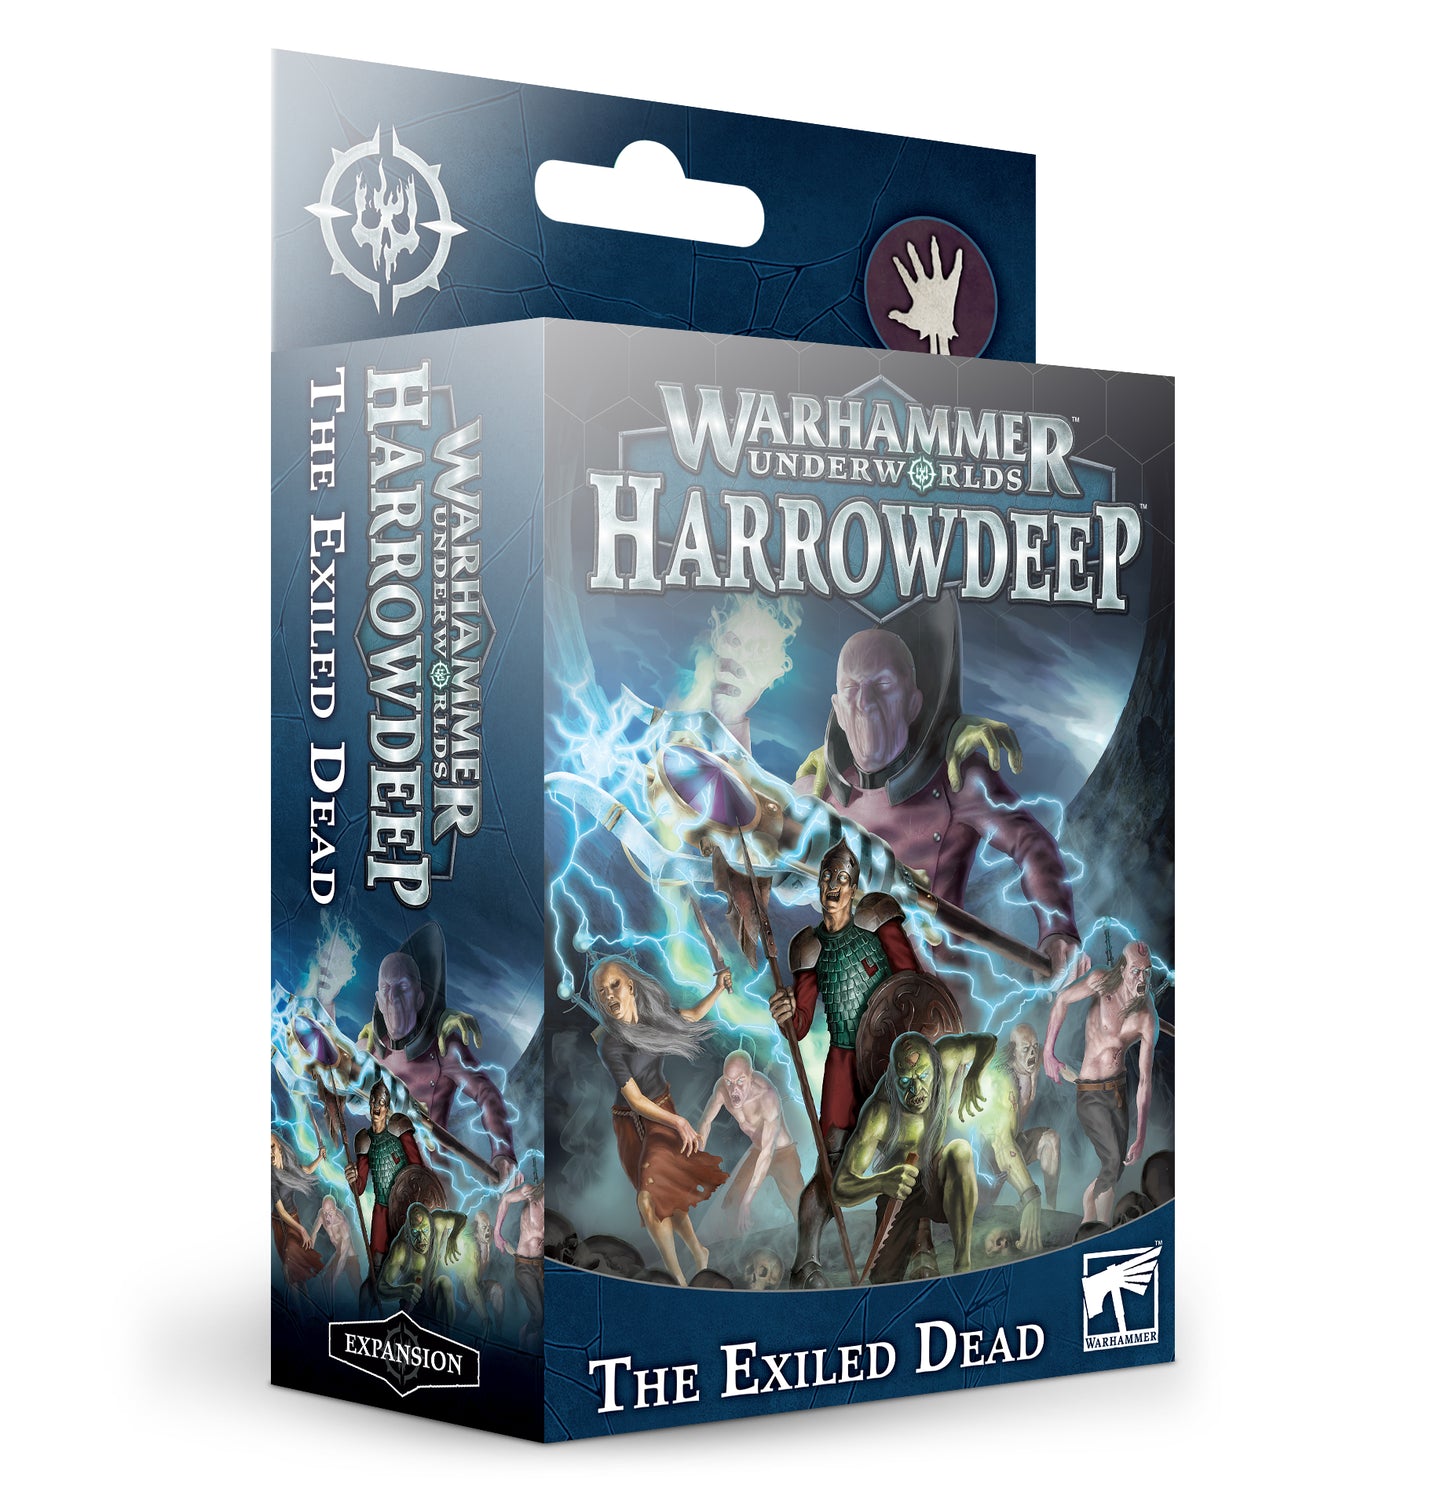 Warhammer Underworlds Harrowdeep – The Exiled Dead